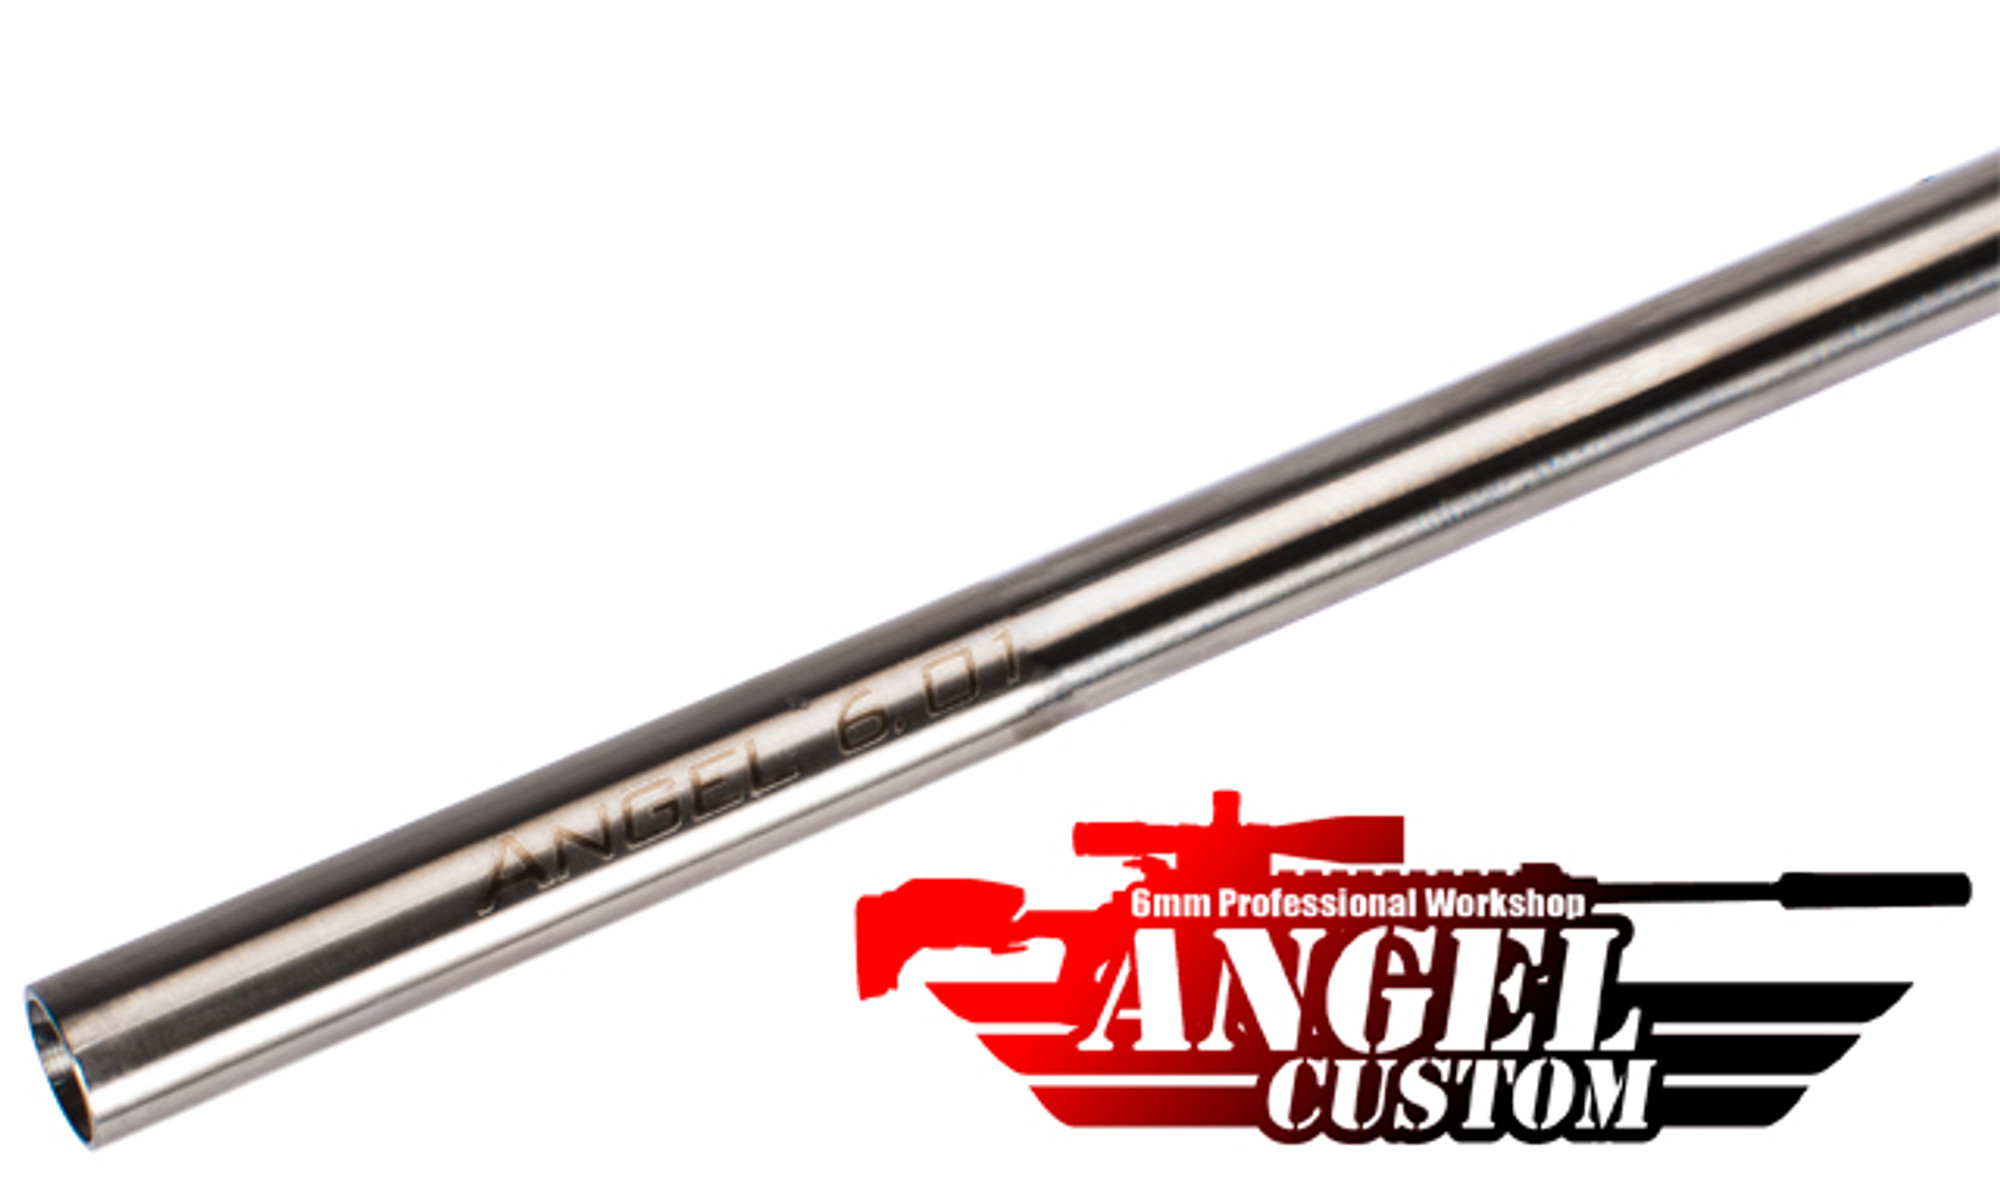 Angel Custom G2 SUS304 Stainless Steel 6.01mm GBB Tightbore Inner Barrel (240mm Hi-CAPA 1911 M9 Challenge)